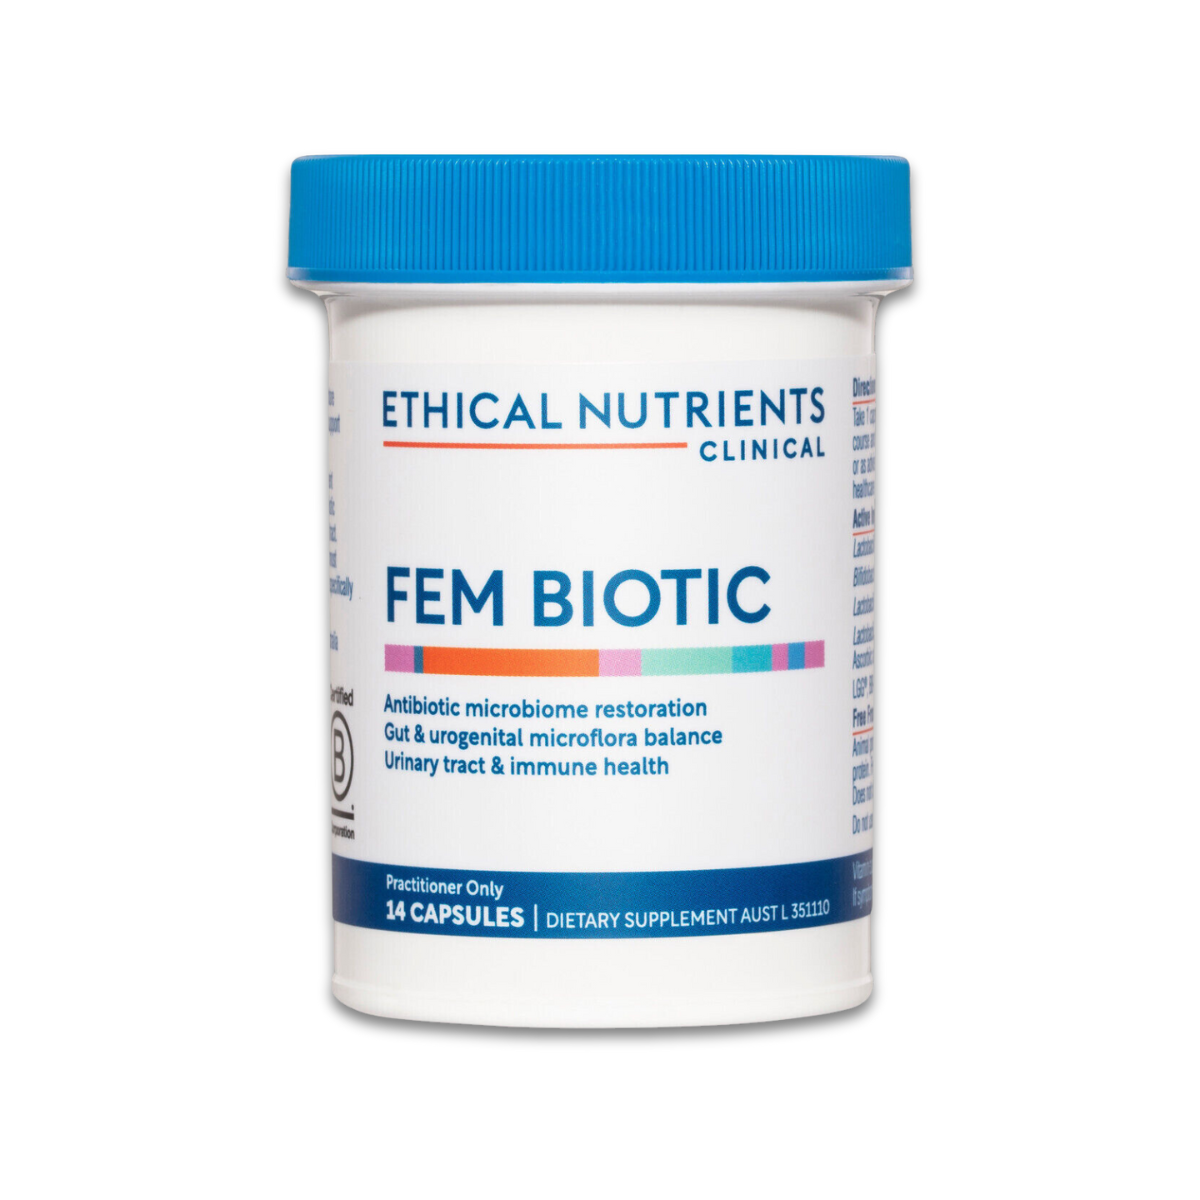 Ethical Nutrients Clinical Fem Biotic 14 Capsules